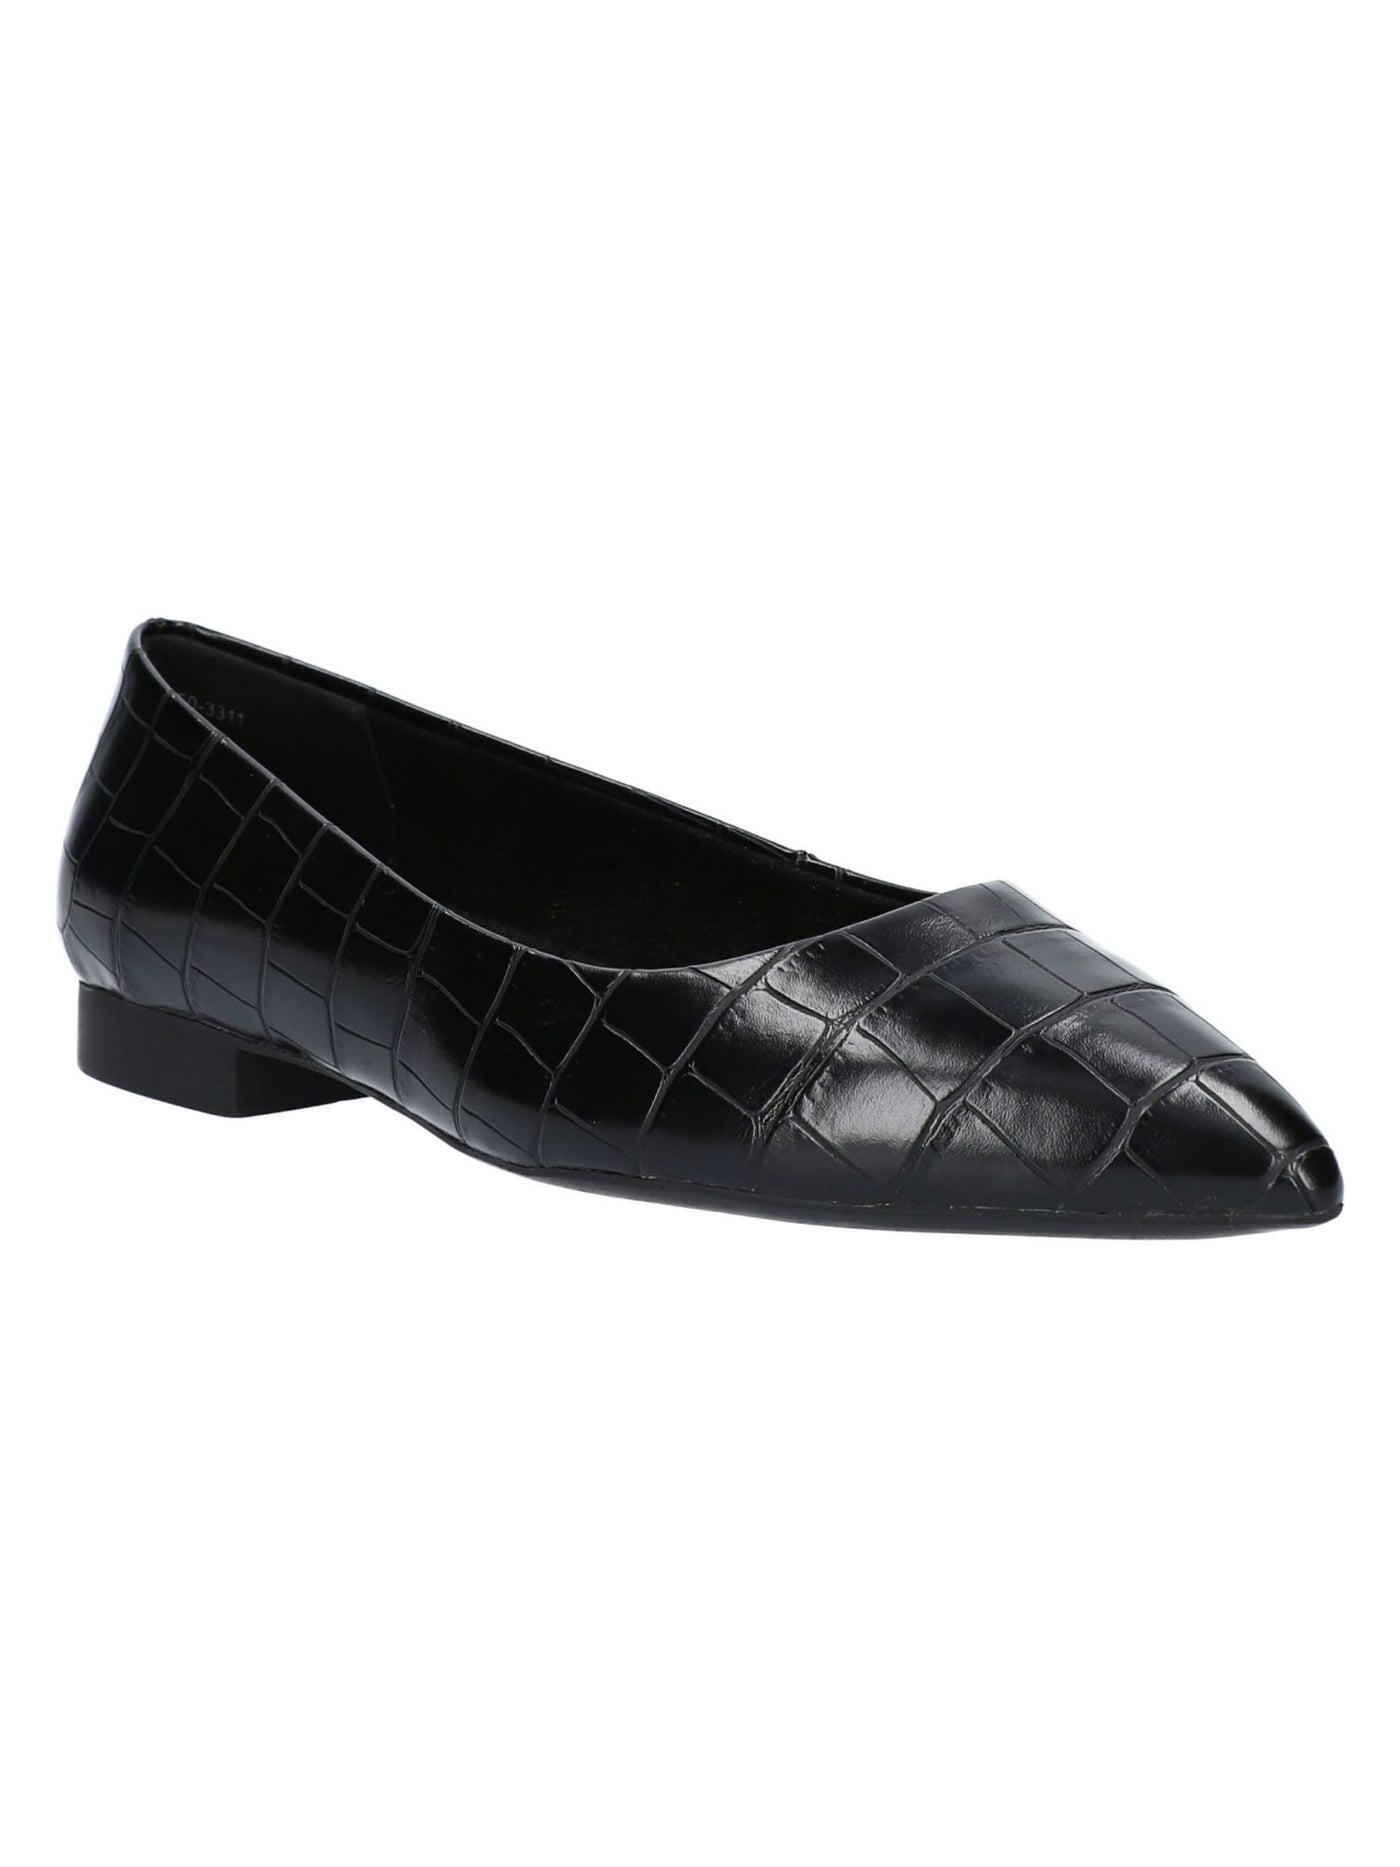 BELLA VITA Womens Black Padded Vivien Pointed Toe Slip On Dress Flats Shoes 12 M